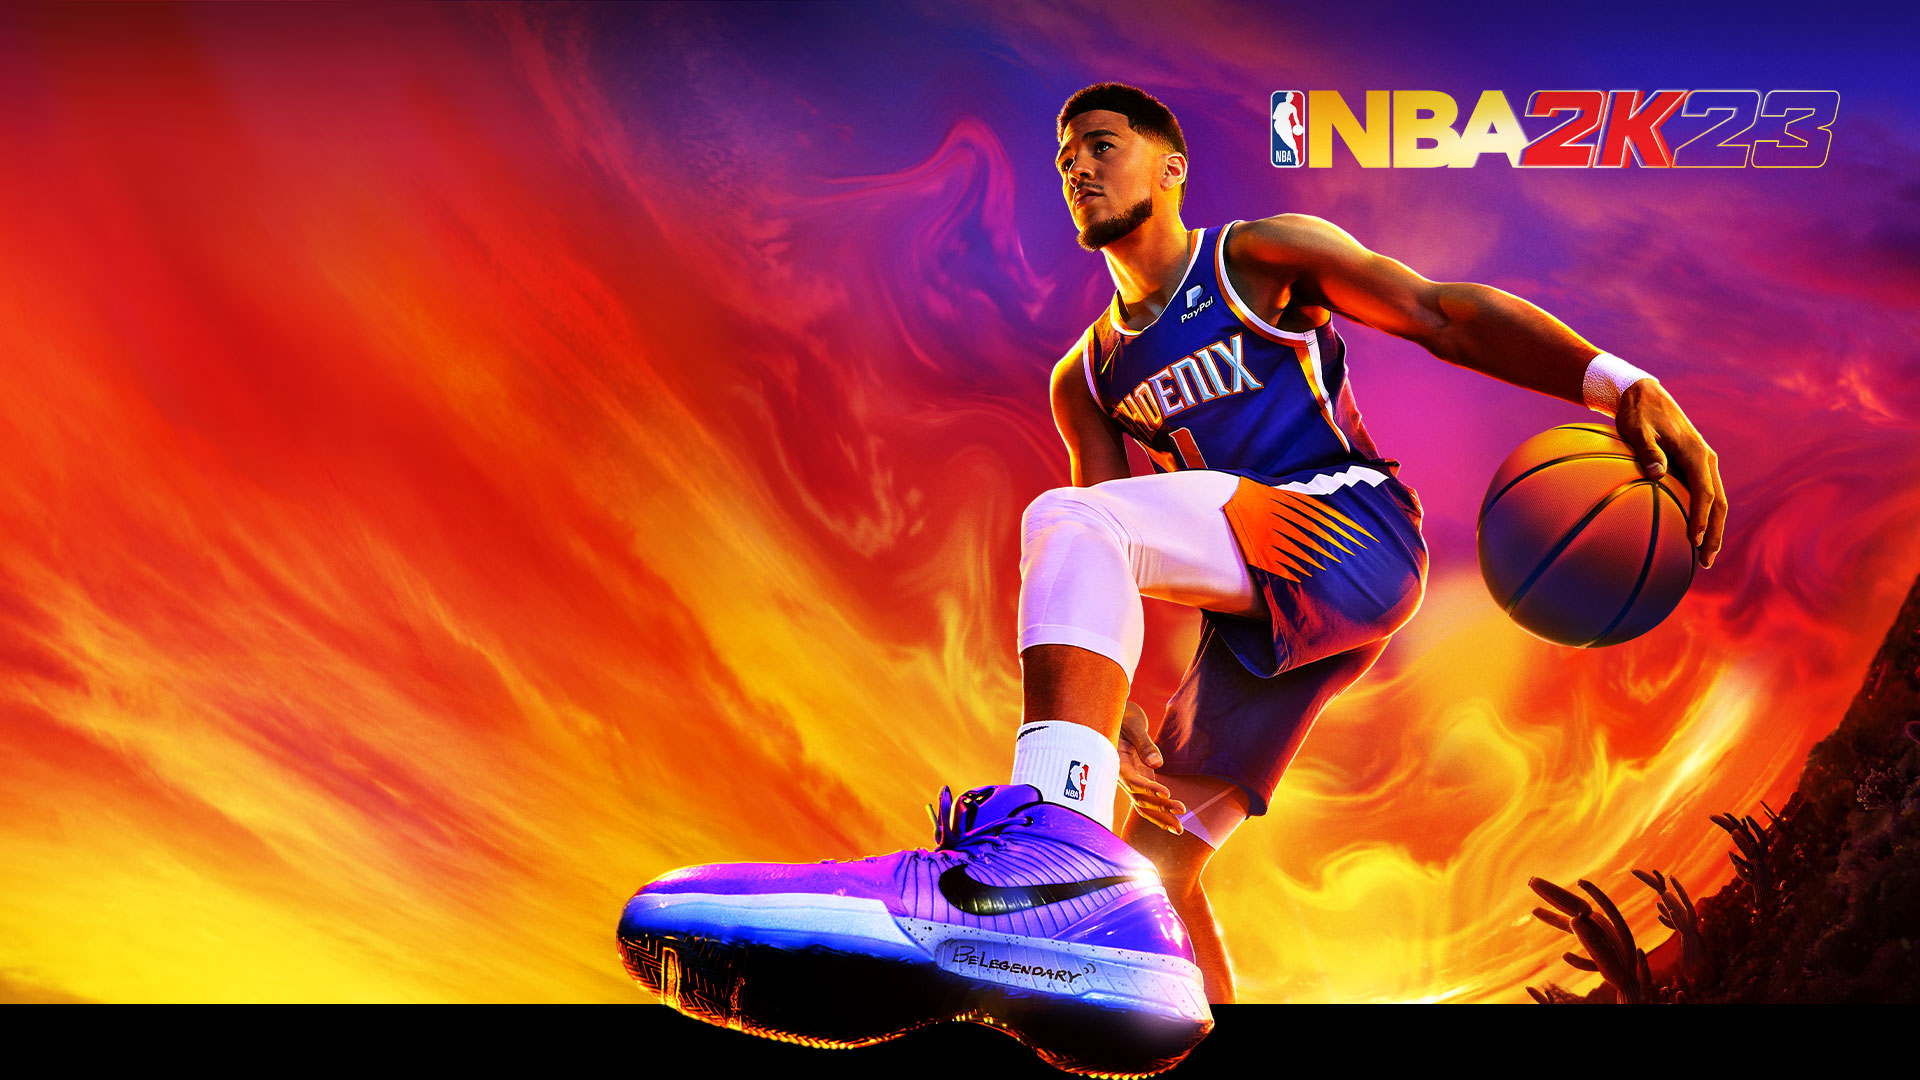 NBA 2K23, 피닉스 선즈의 1번인 데빈 부커가 다채로운 사막 하늘 아래에서 농구공을 드리블합니다.